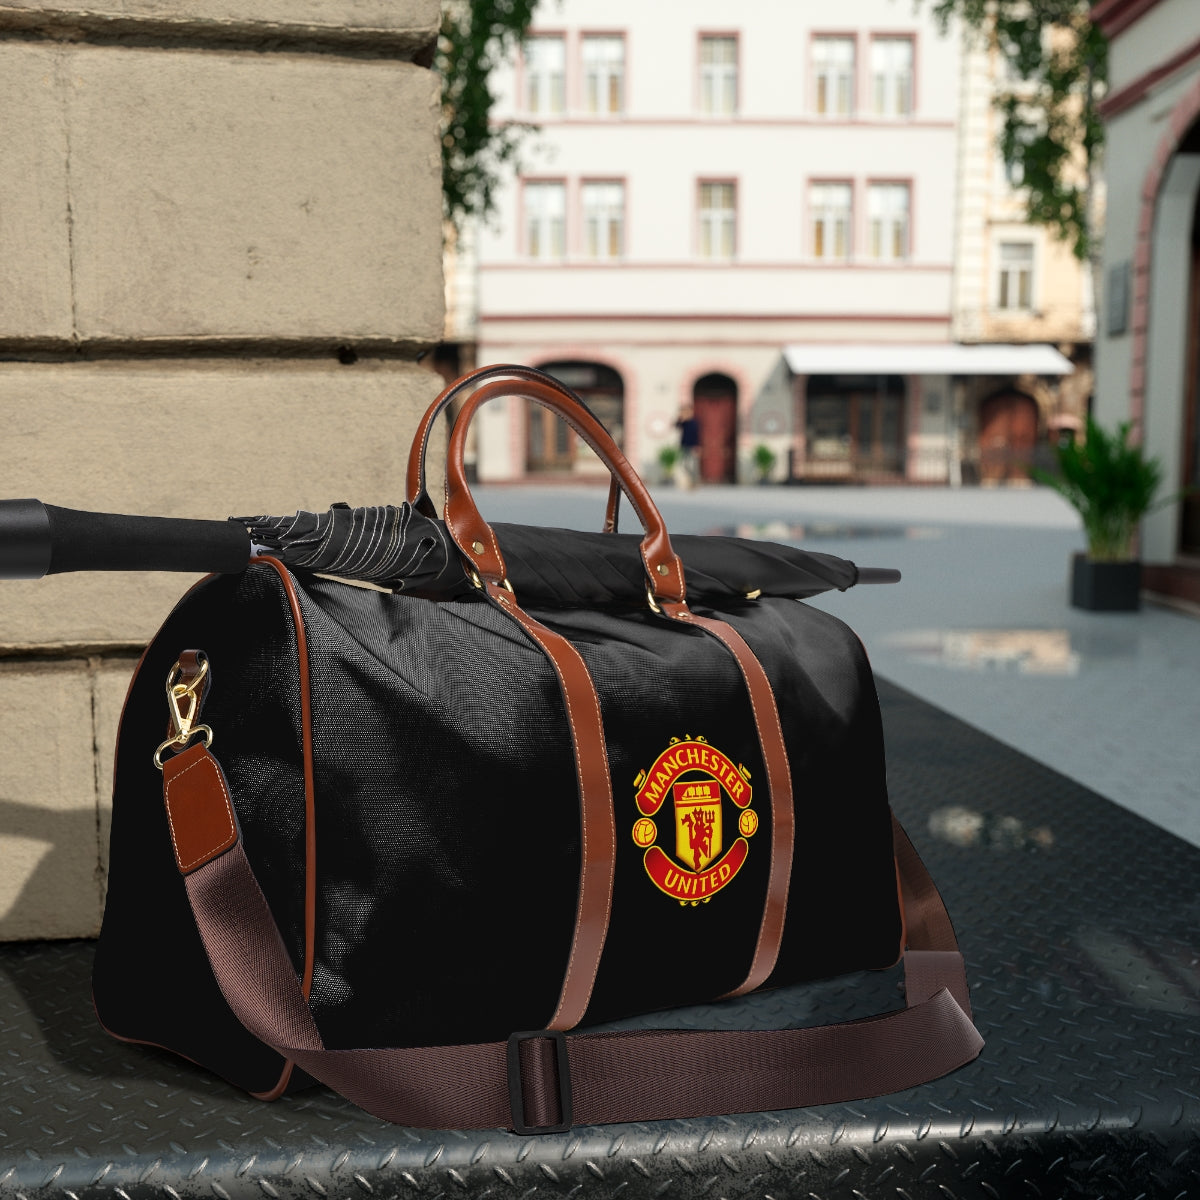 Manchester United Waterproof Travel Bag - Black